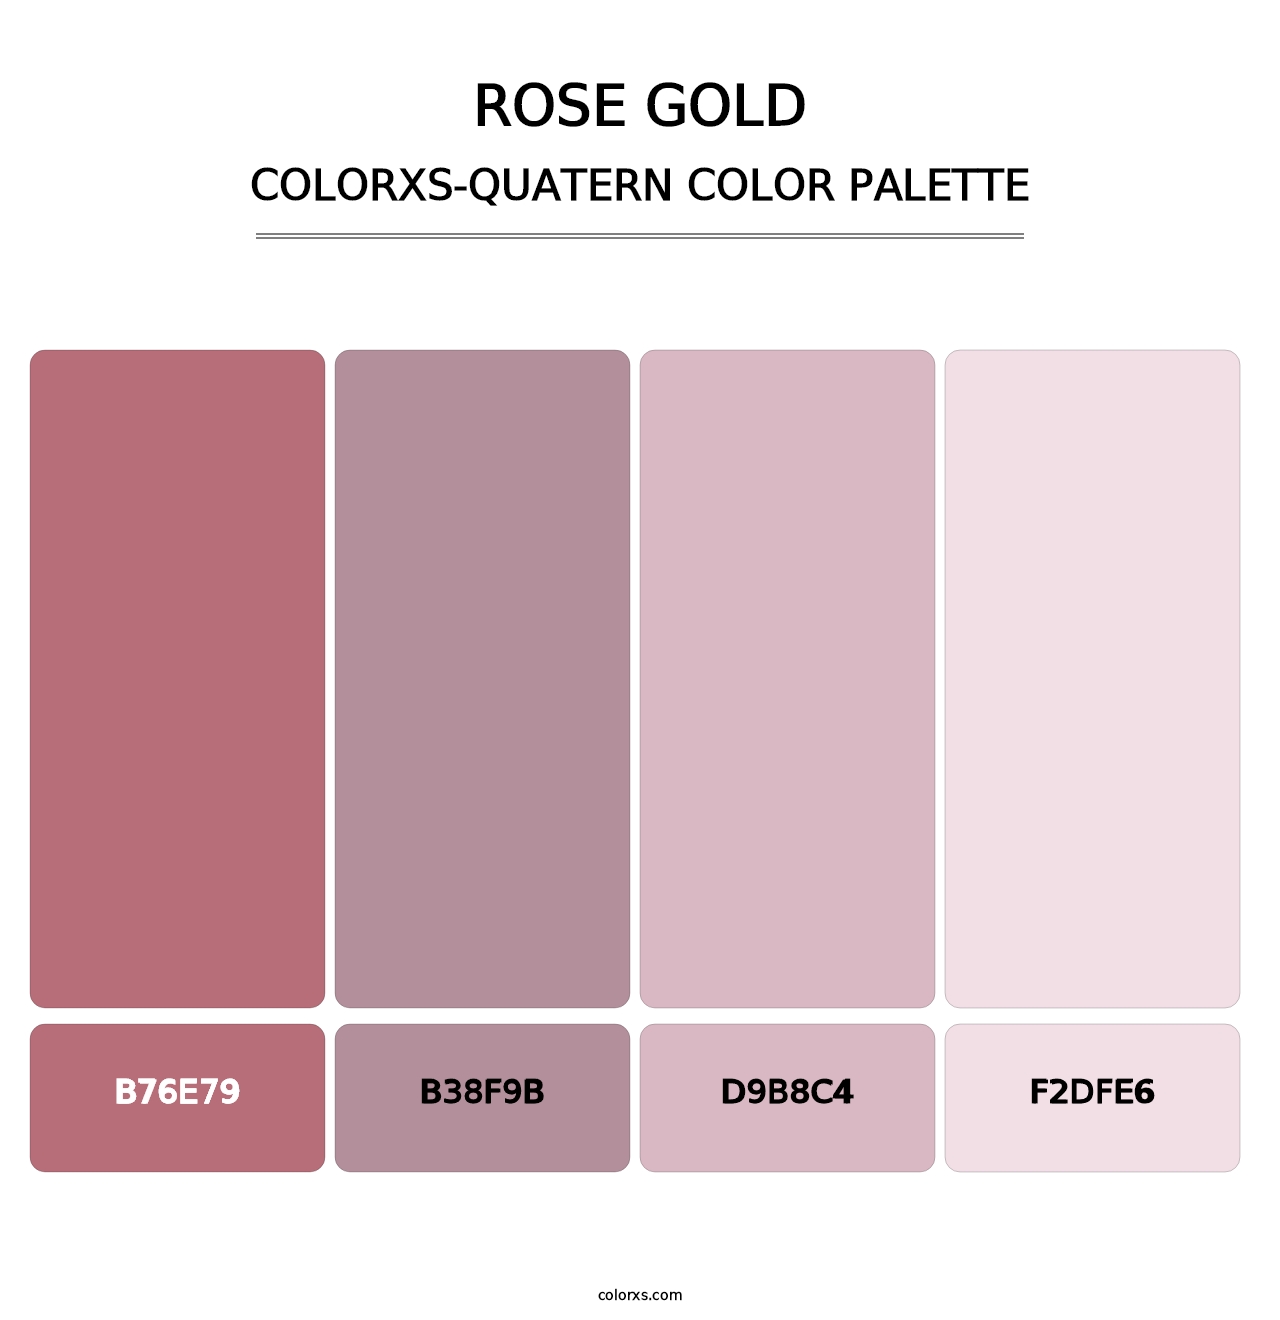 Rose Gold - Colorxs Quatern Palette